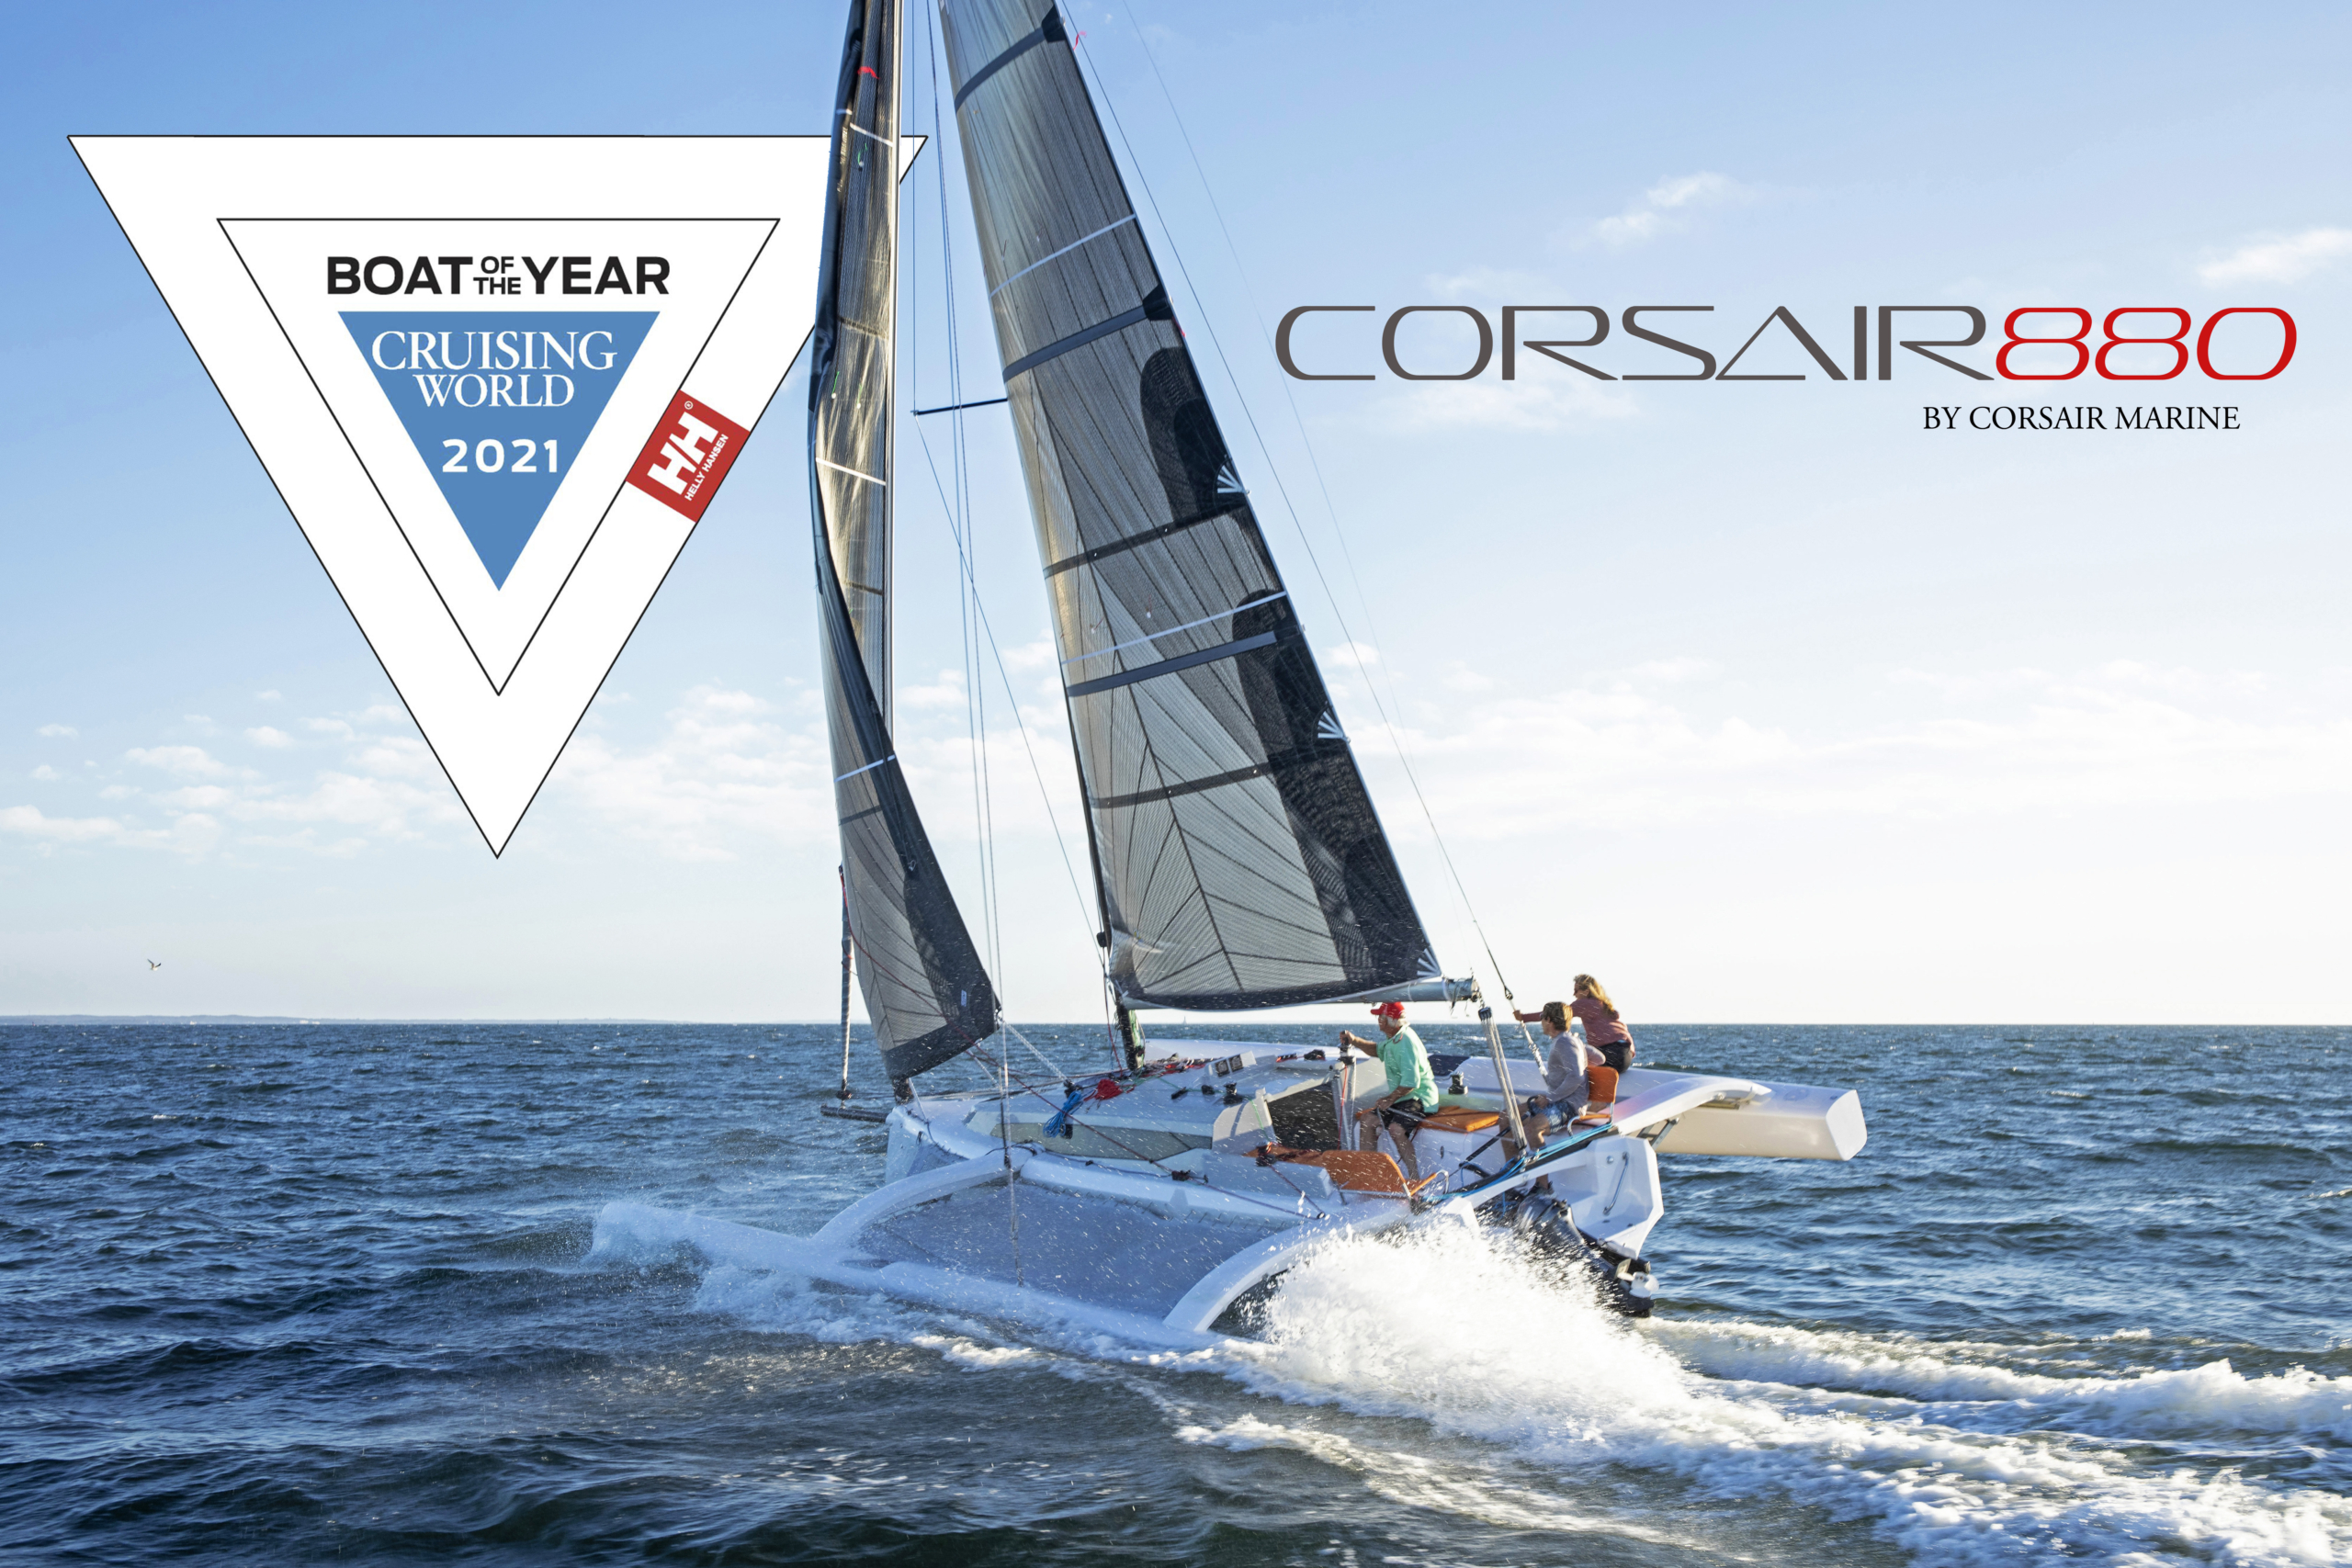 Corsair 880 To Be 2021 Best Sport Boat Of The Year By Cruising World Corsair Marine Blog